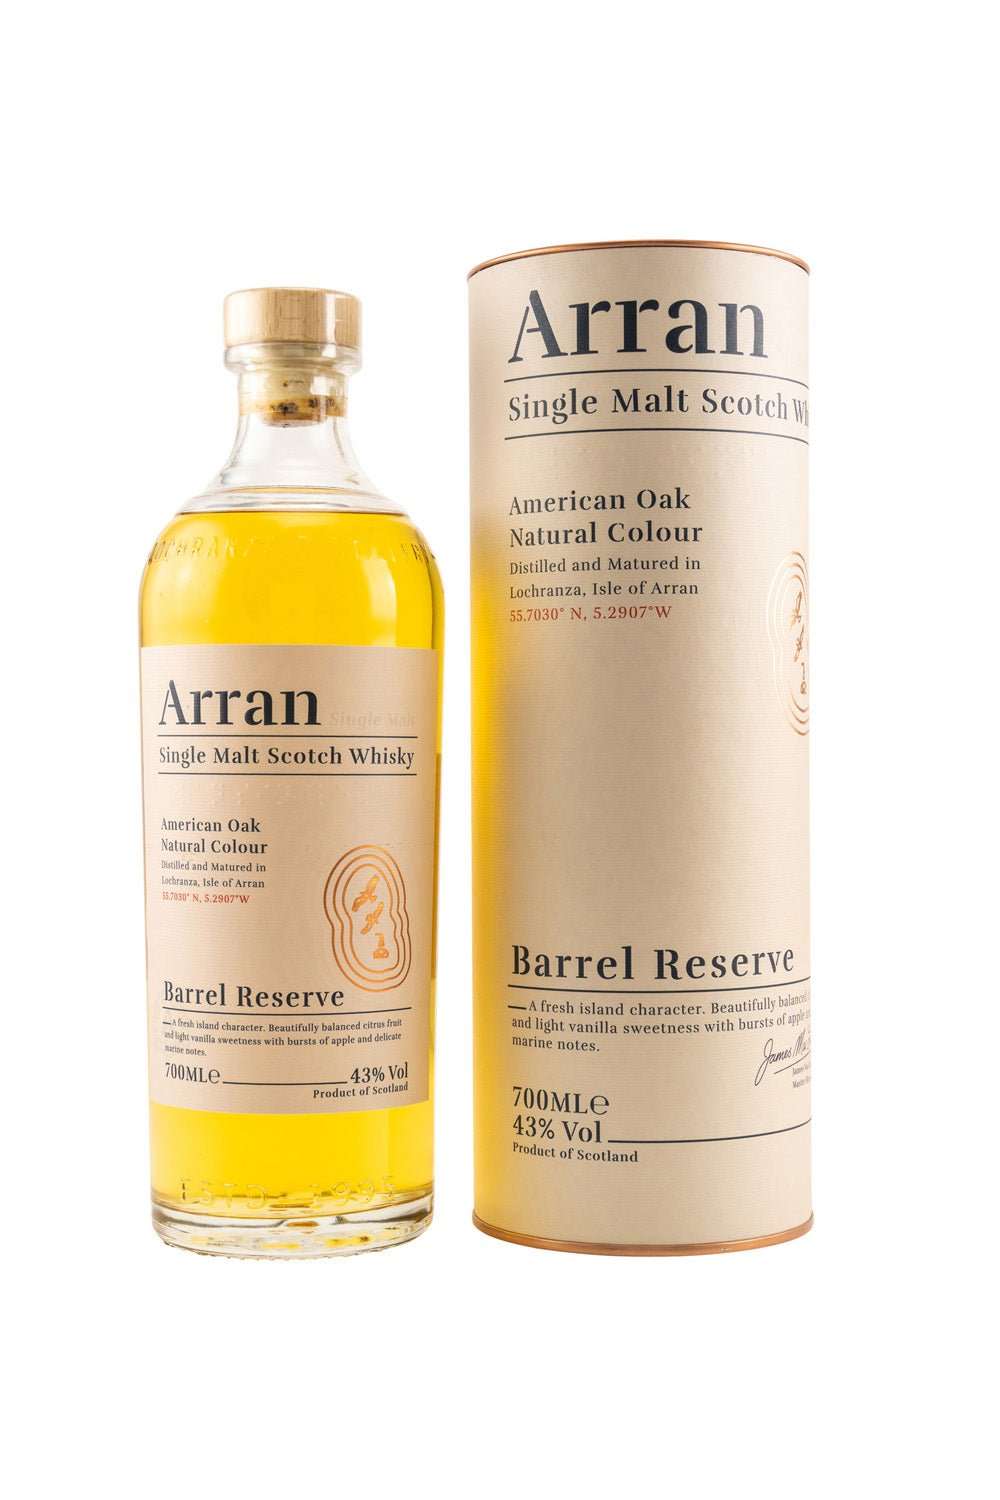 Arran Barrel Reserve Single Malt Scotch Whisky 43% vol. 700ml - Maltimore